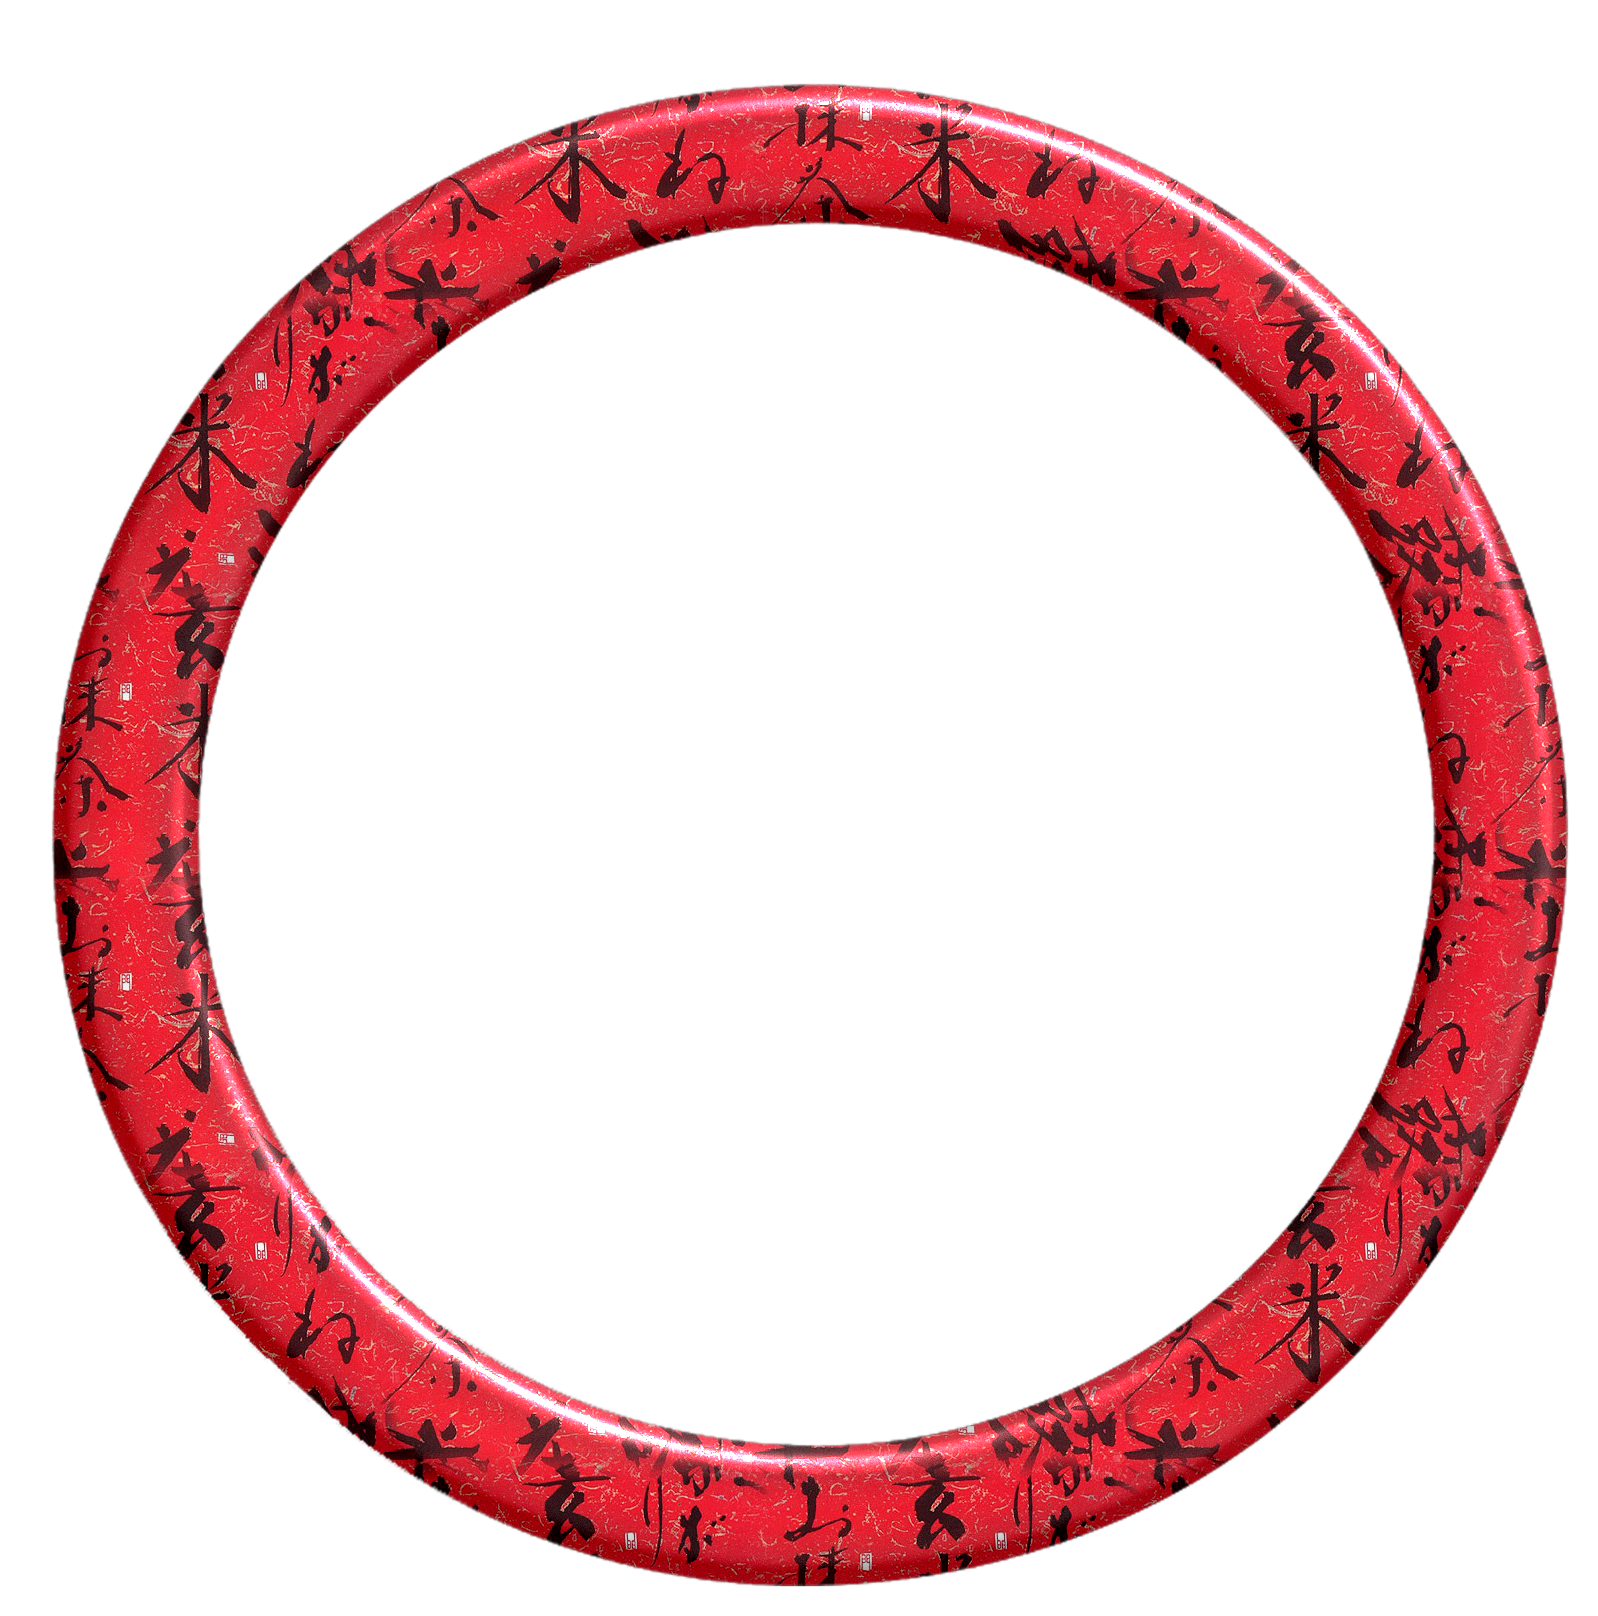 Circle Red Red Circle Png Download 15981616 Free Transparent